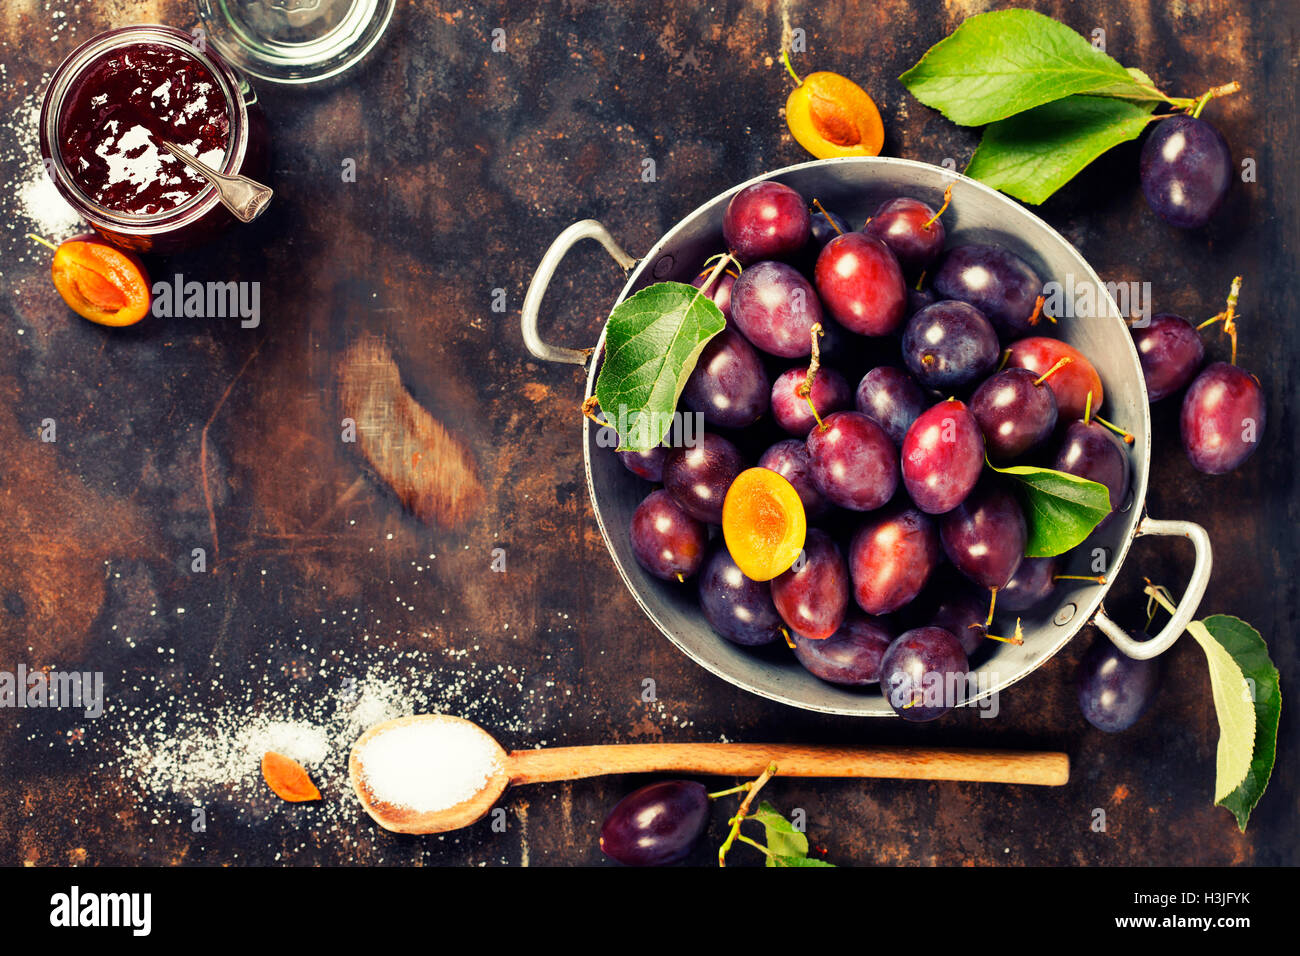 Making plum jam bassed on traditional recipe Stock Photo